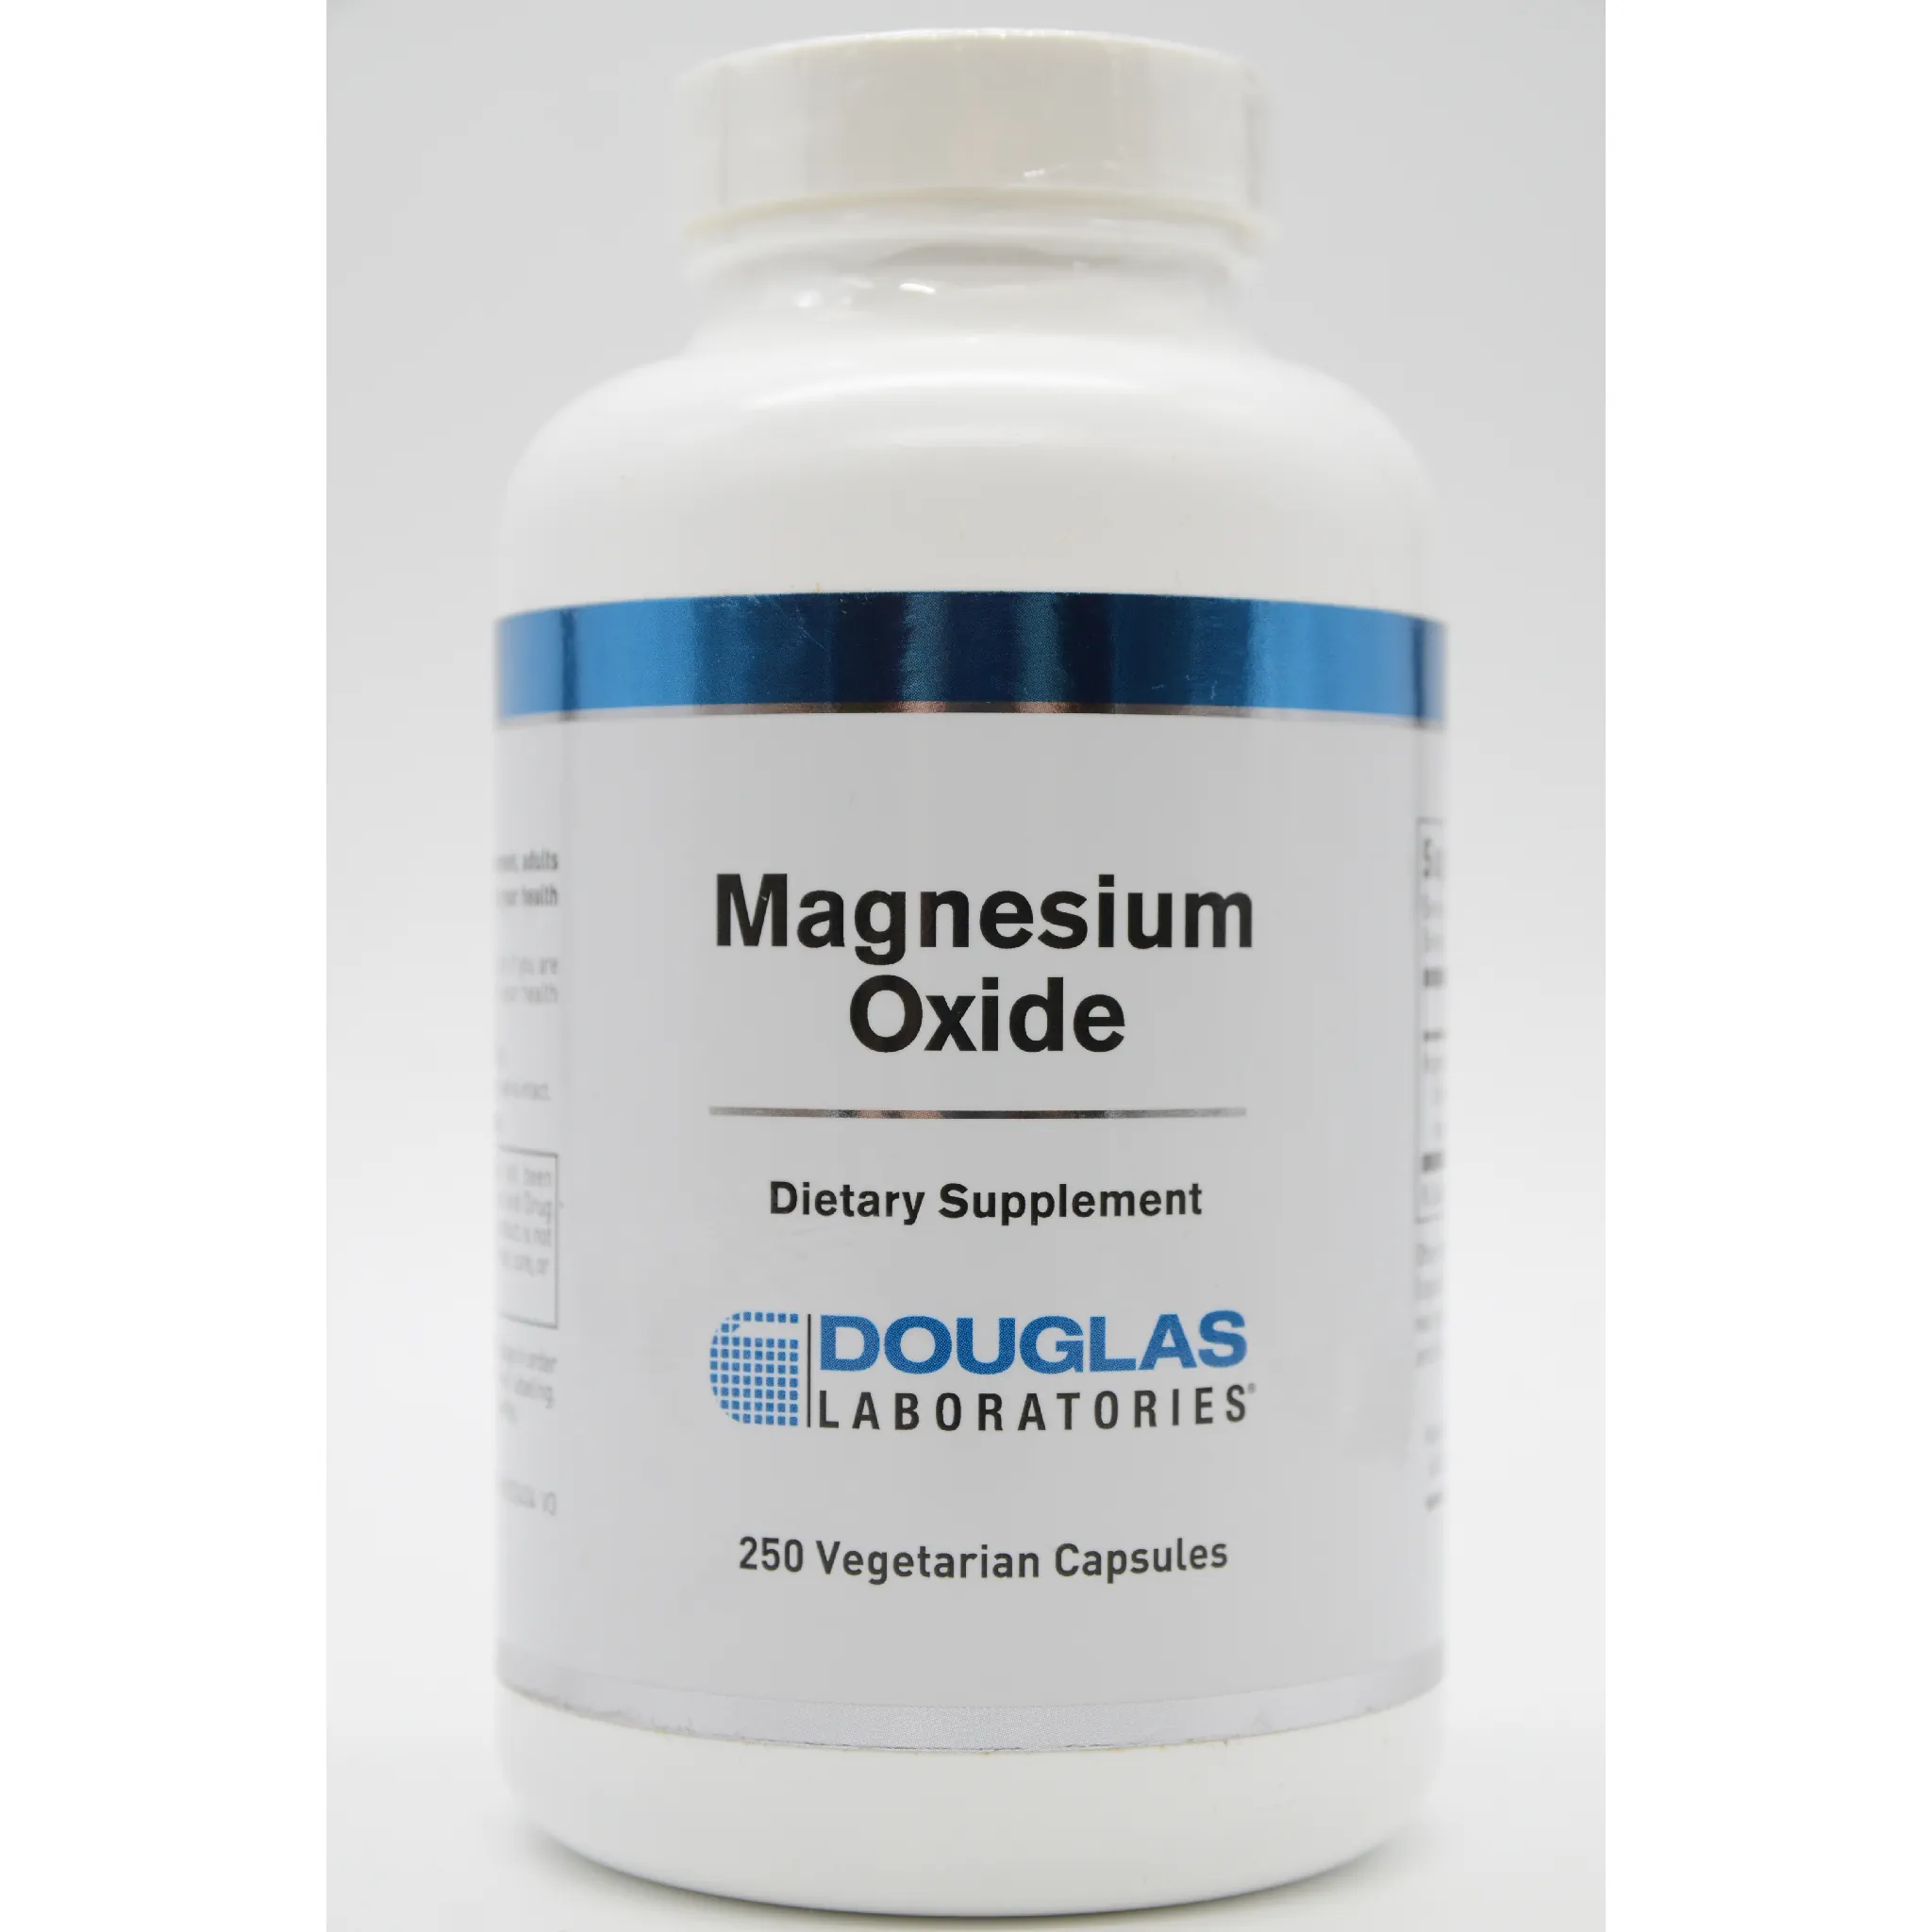 Douglas Laboratories - Magnesium Oxide